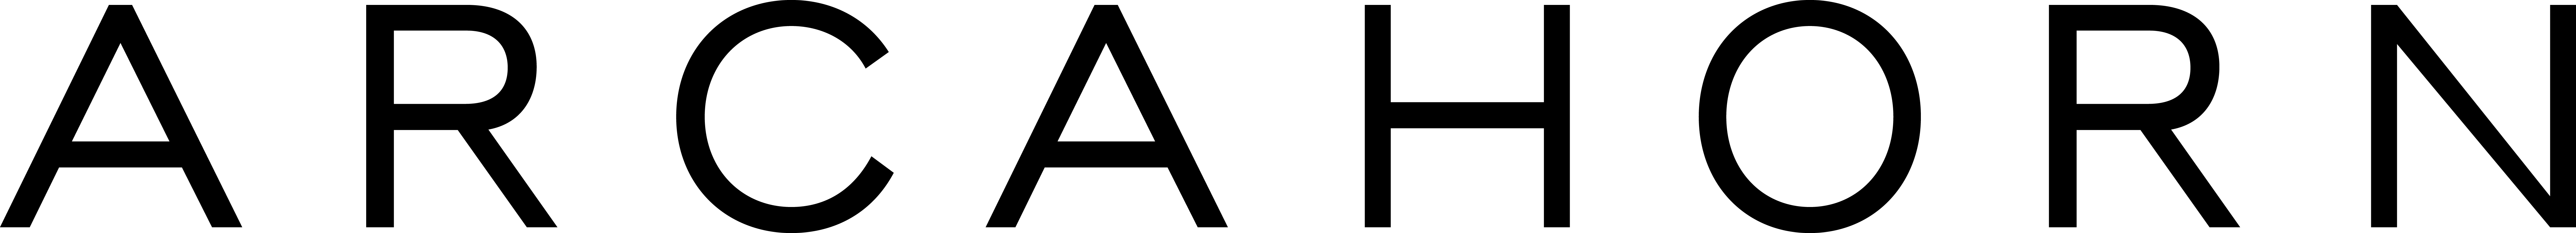 Logo ARCAHORN nero trasp